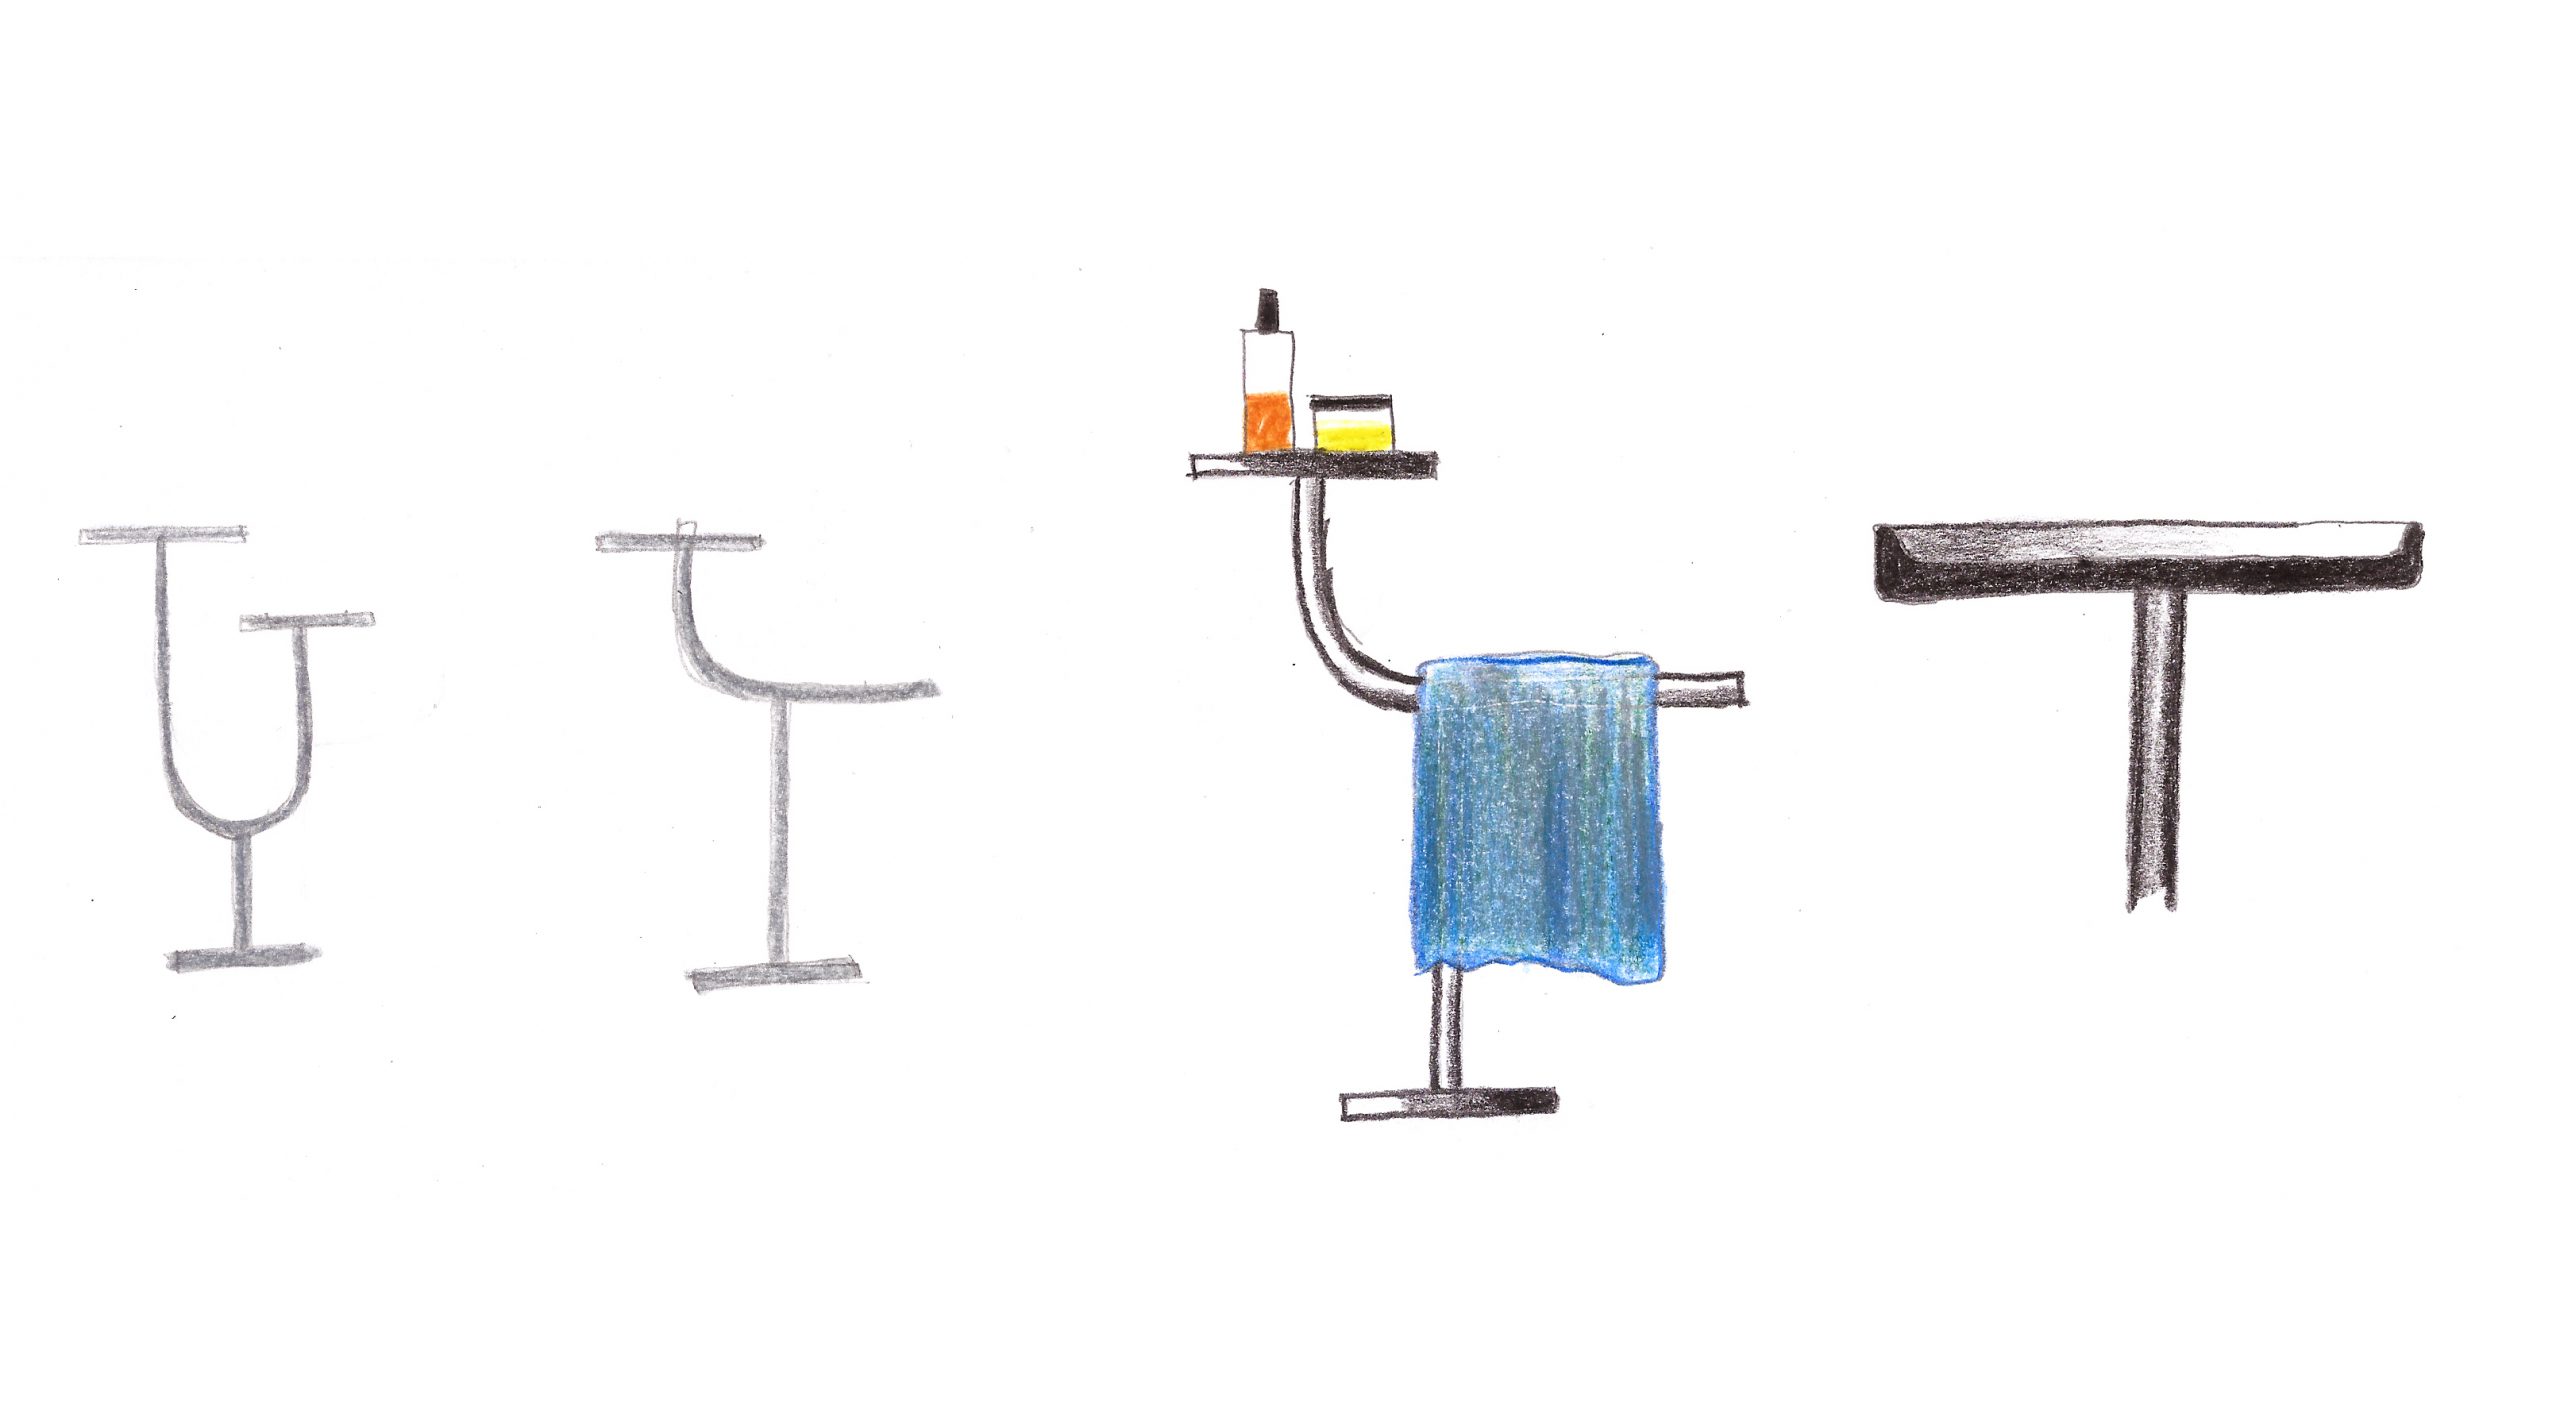 Sketch of Bivio bathroom accessories by Daniel Debiasi and Federico Sandri